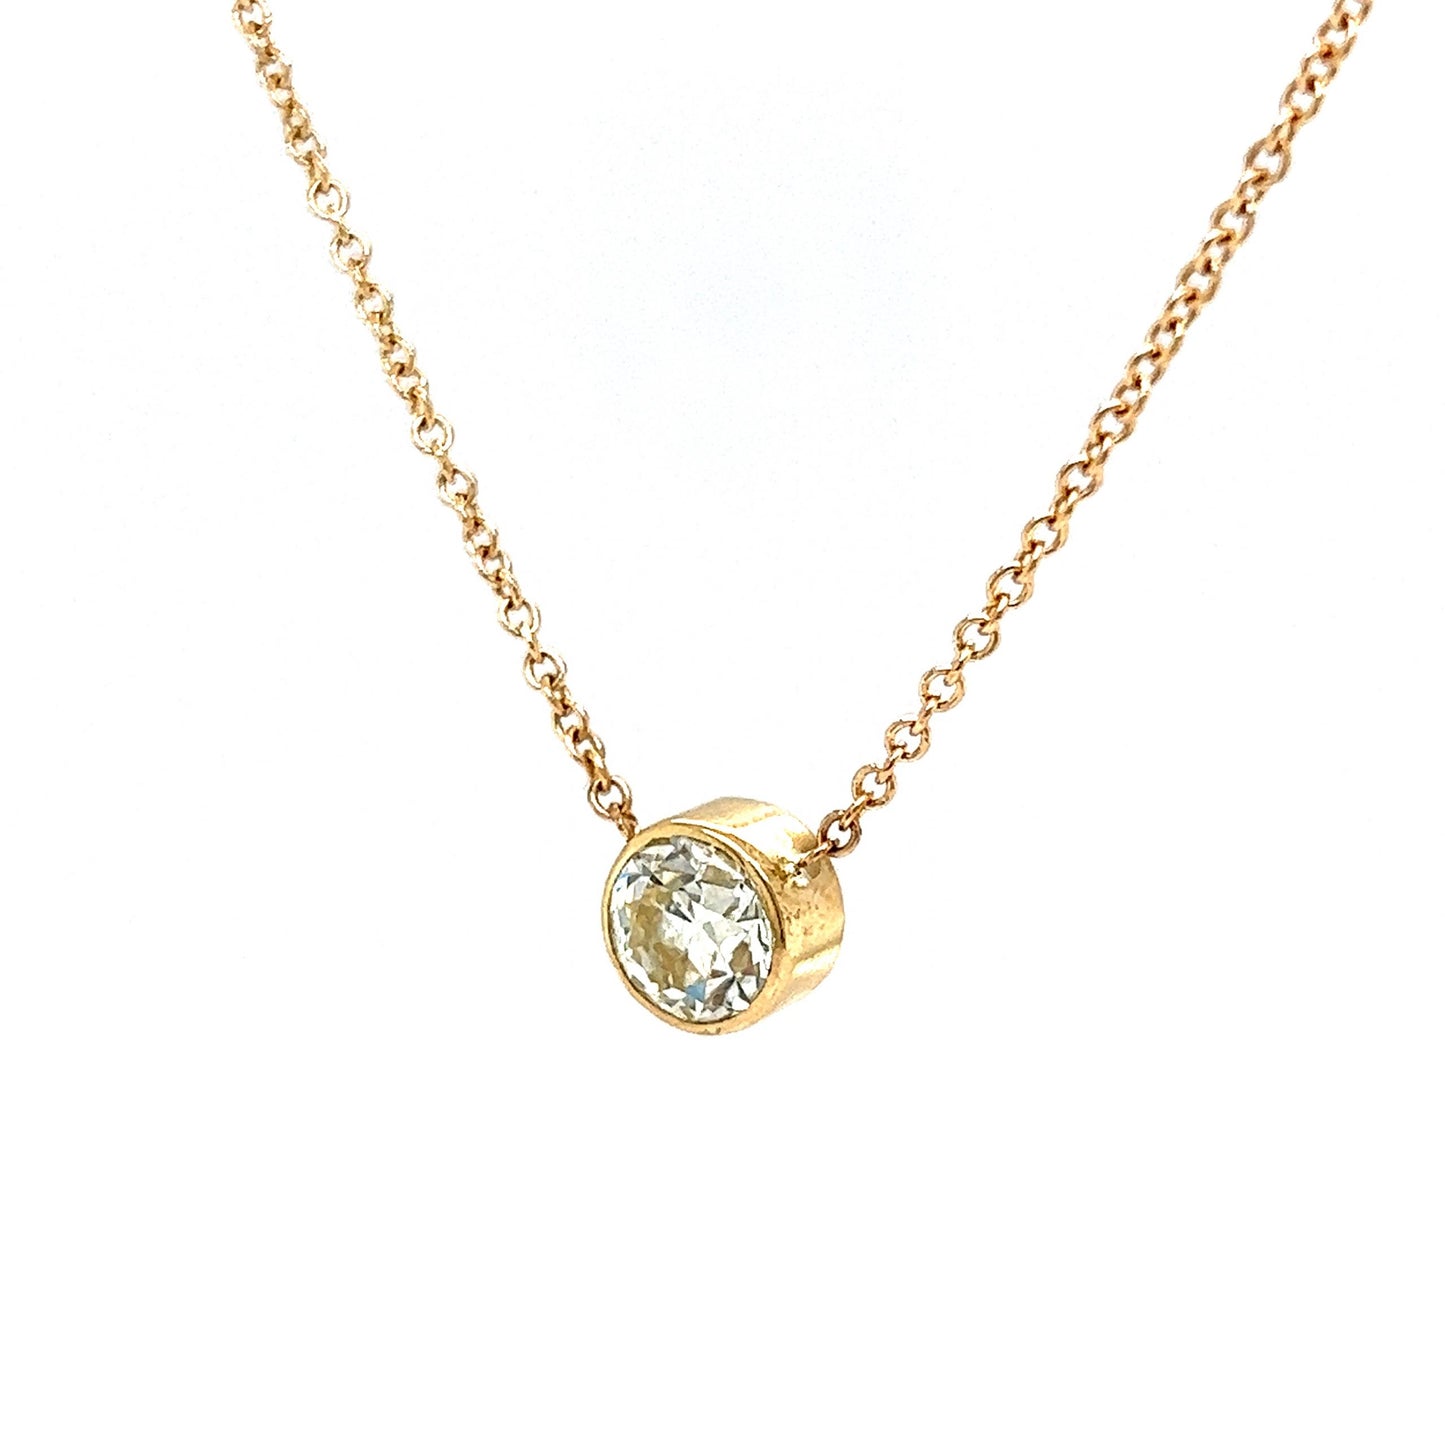 1.61 Bezel Set Old European Diamond Necklace in 14k Gold